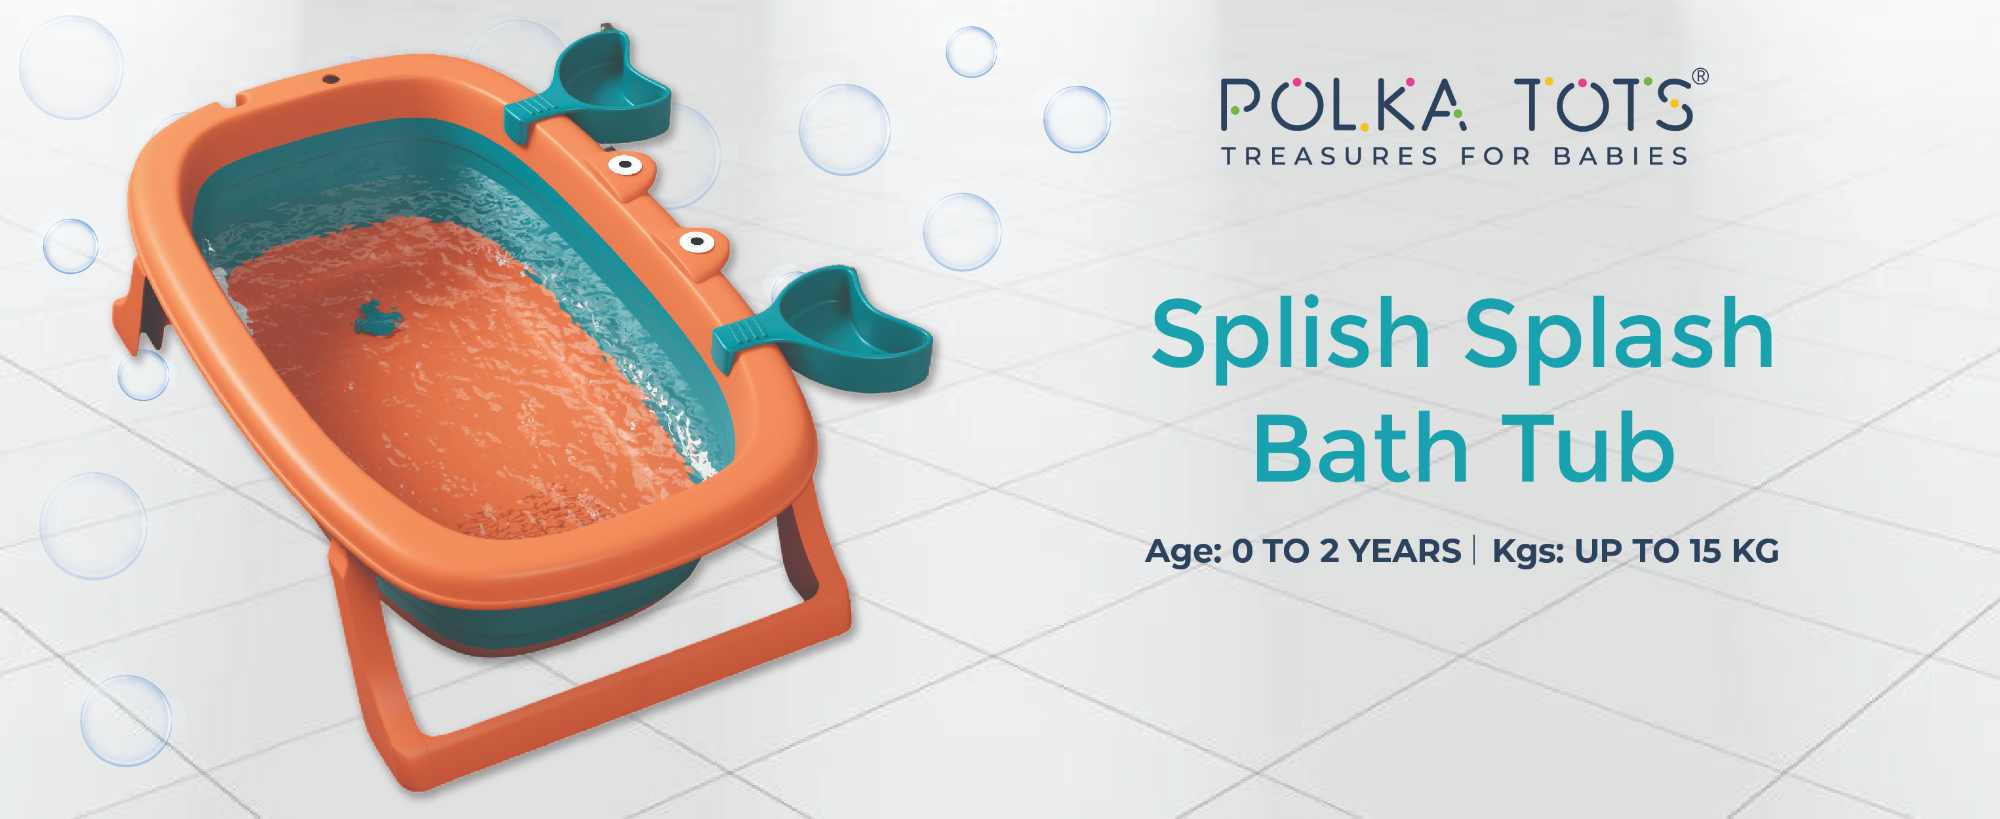 polka tots baby bathtub online